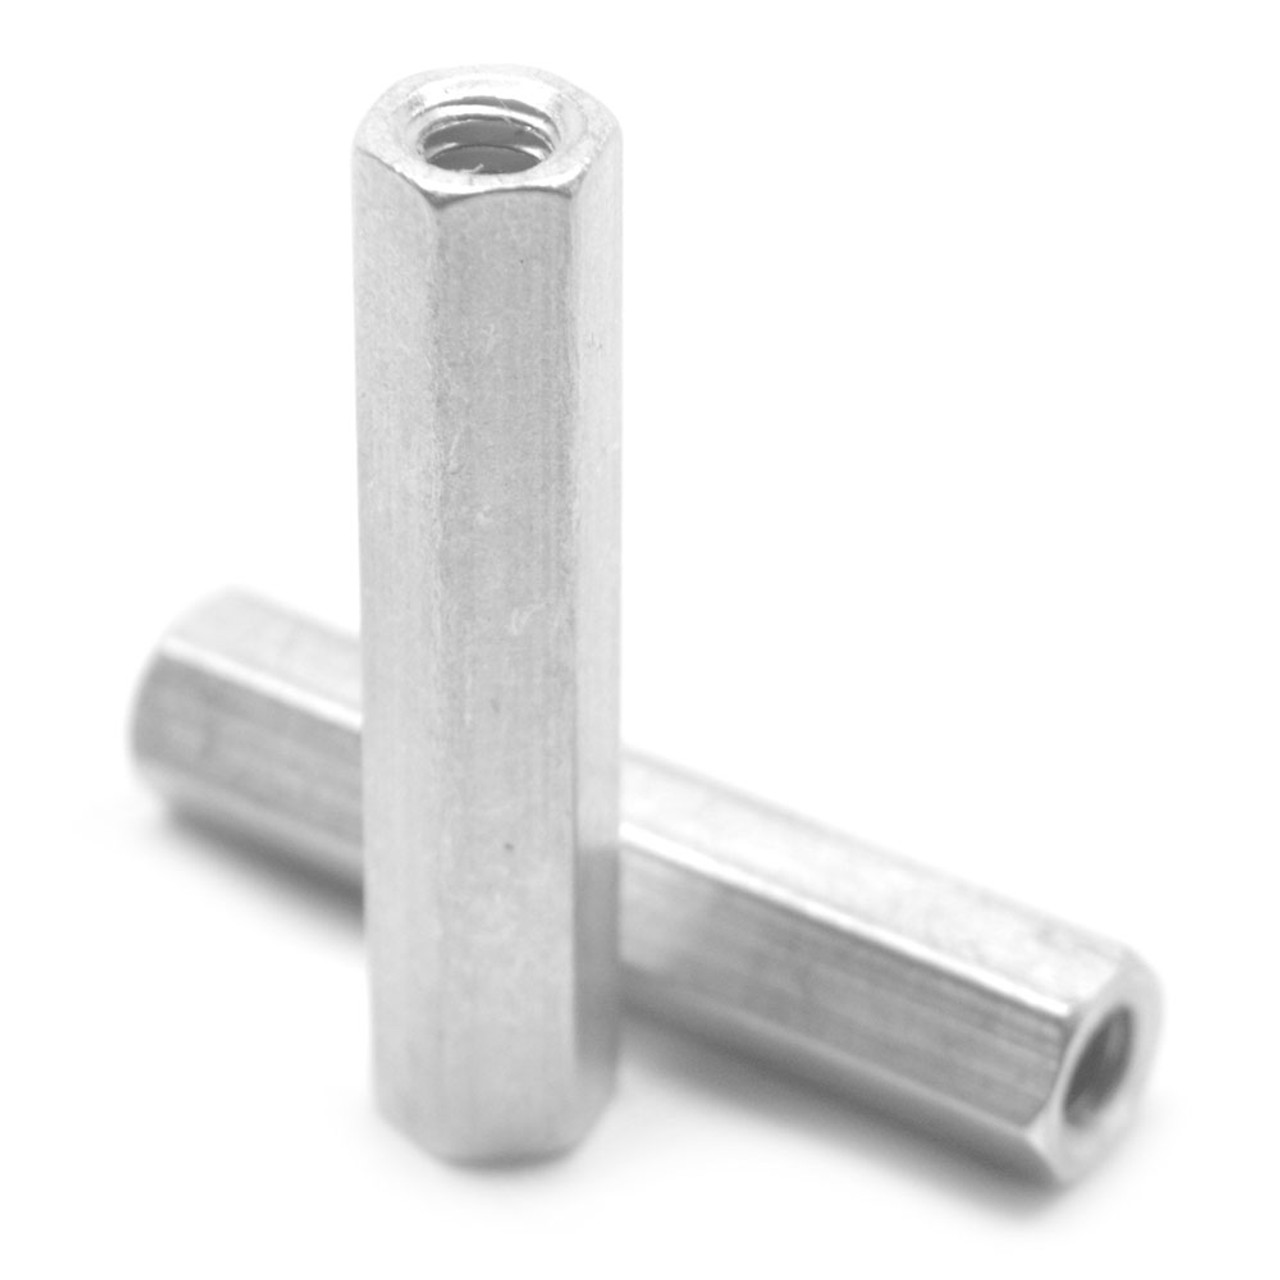 #6-32 x 1 1/8" x 1/4" AF Coarse Thread Hex Female Standoff Aluminum